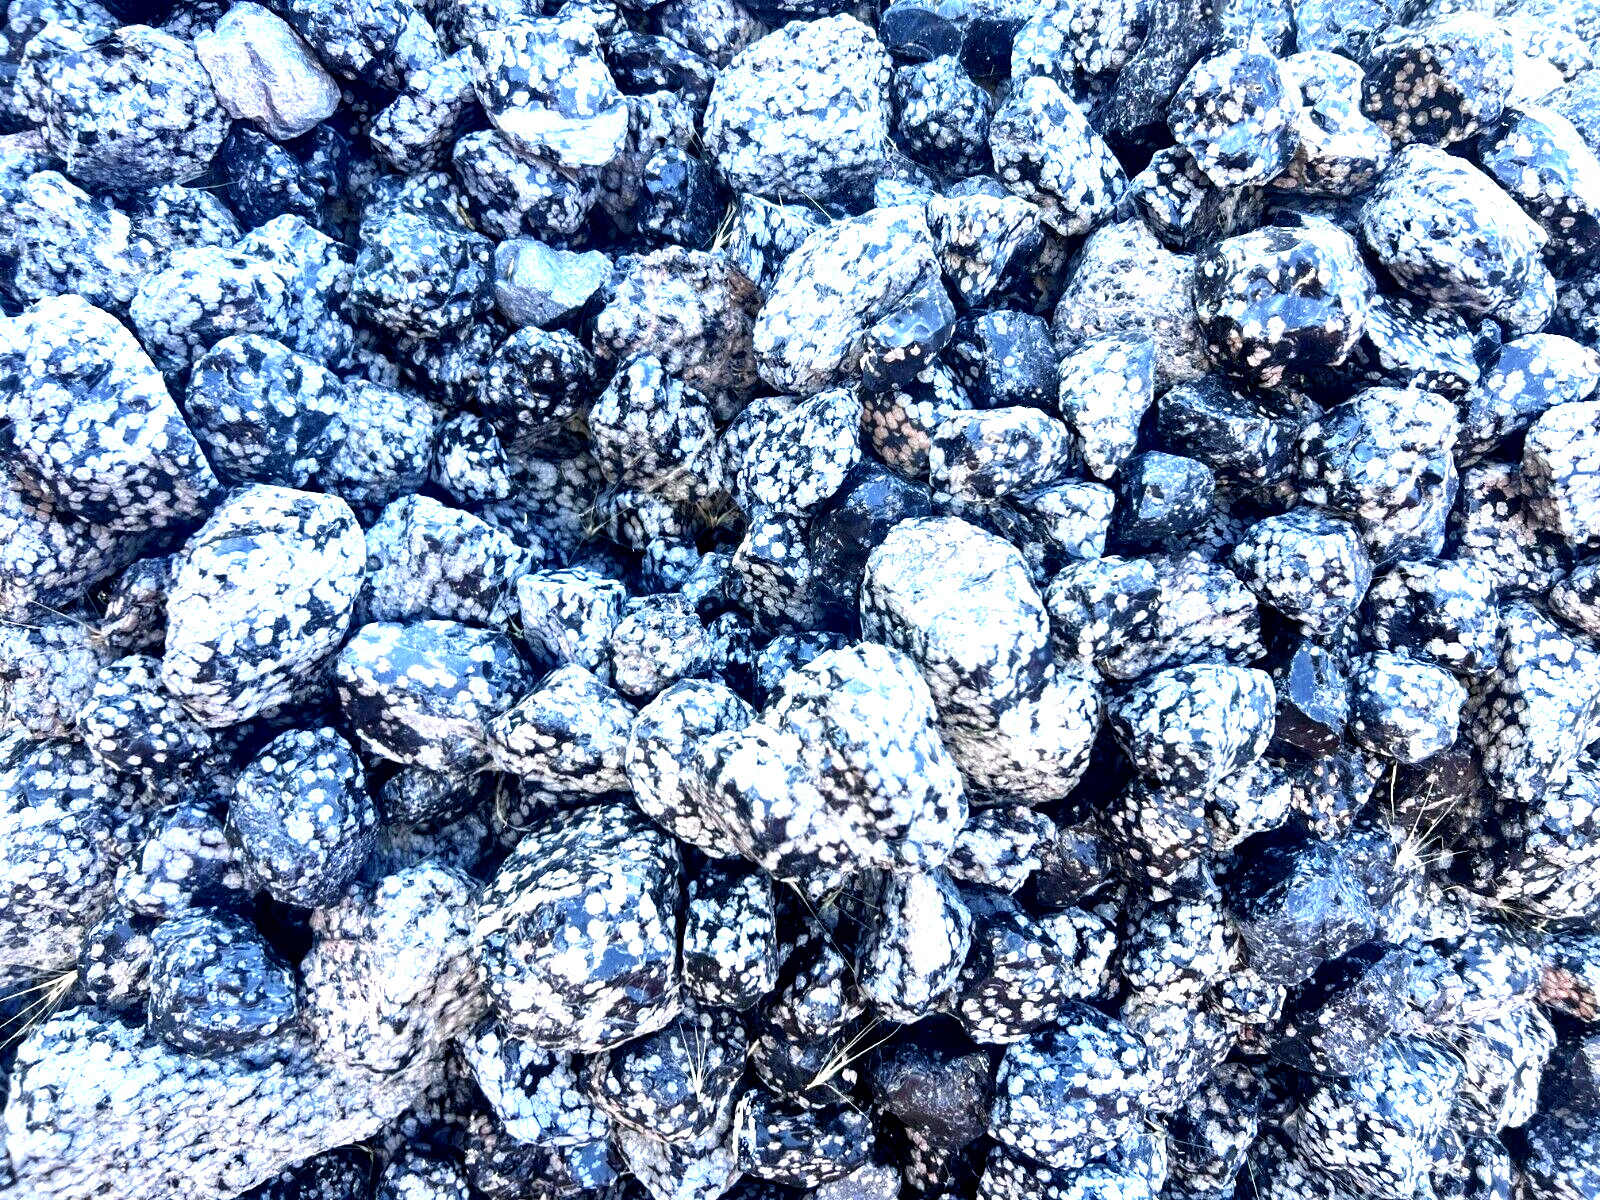 1 lb of Unique Snowflake Obsidian Rough Stones Cabbing Tumble Rocks Decoration